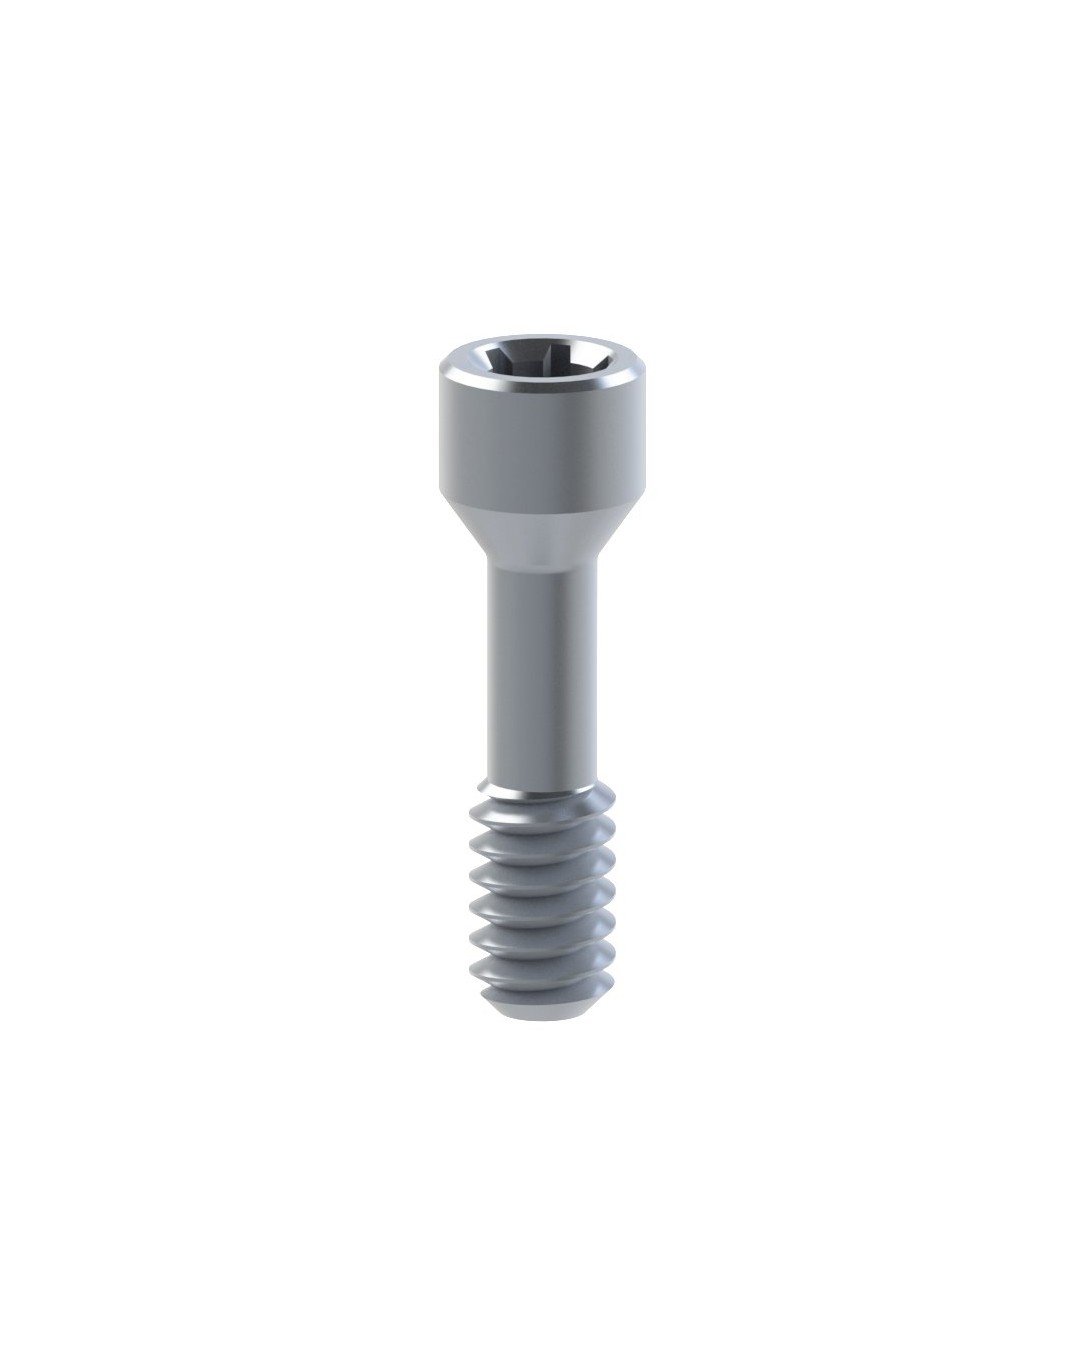 Titanium Screw compatible with Nobel Biocare® Brånemark®